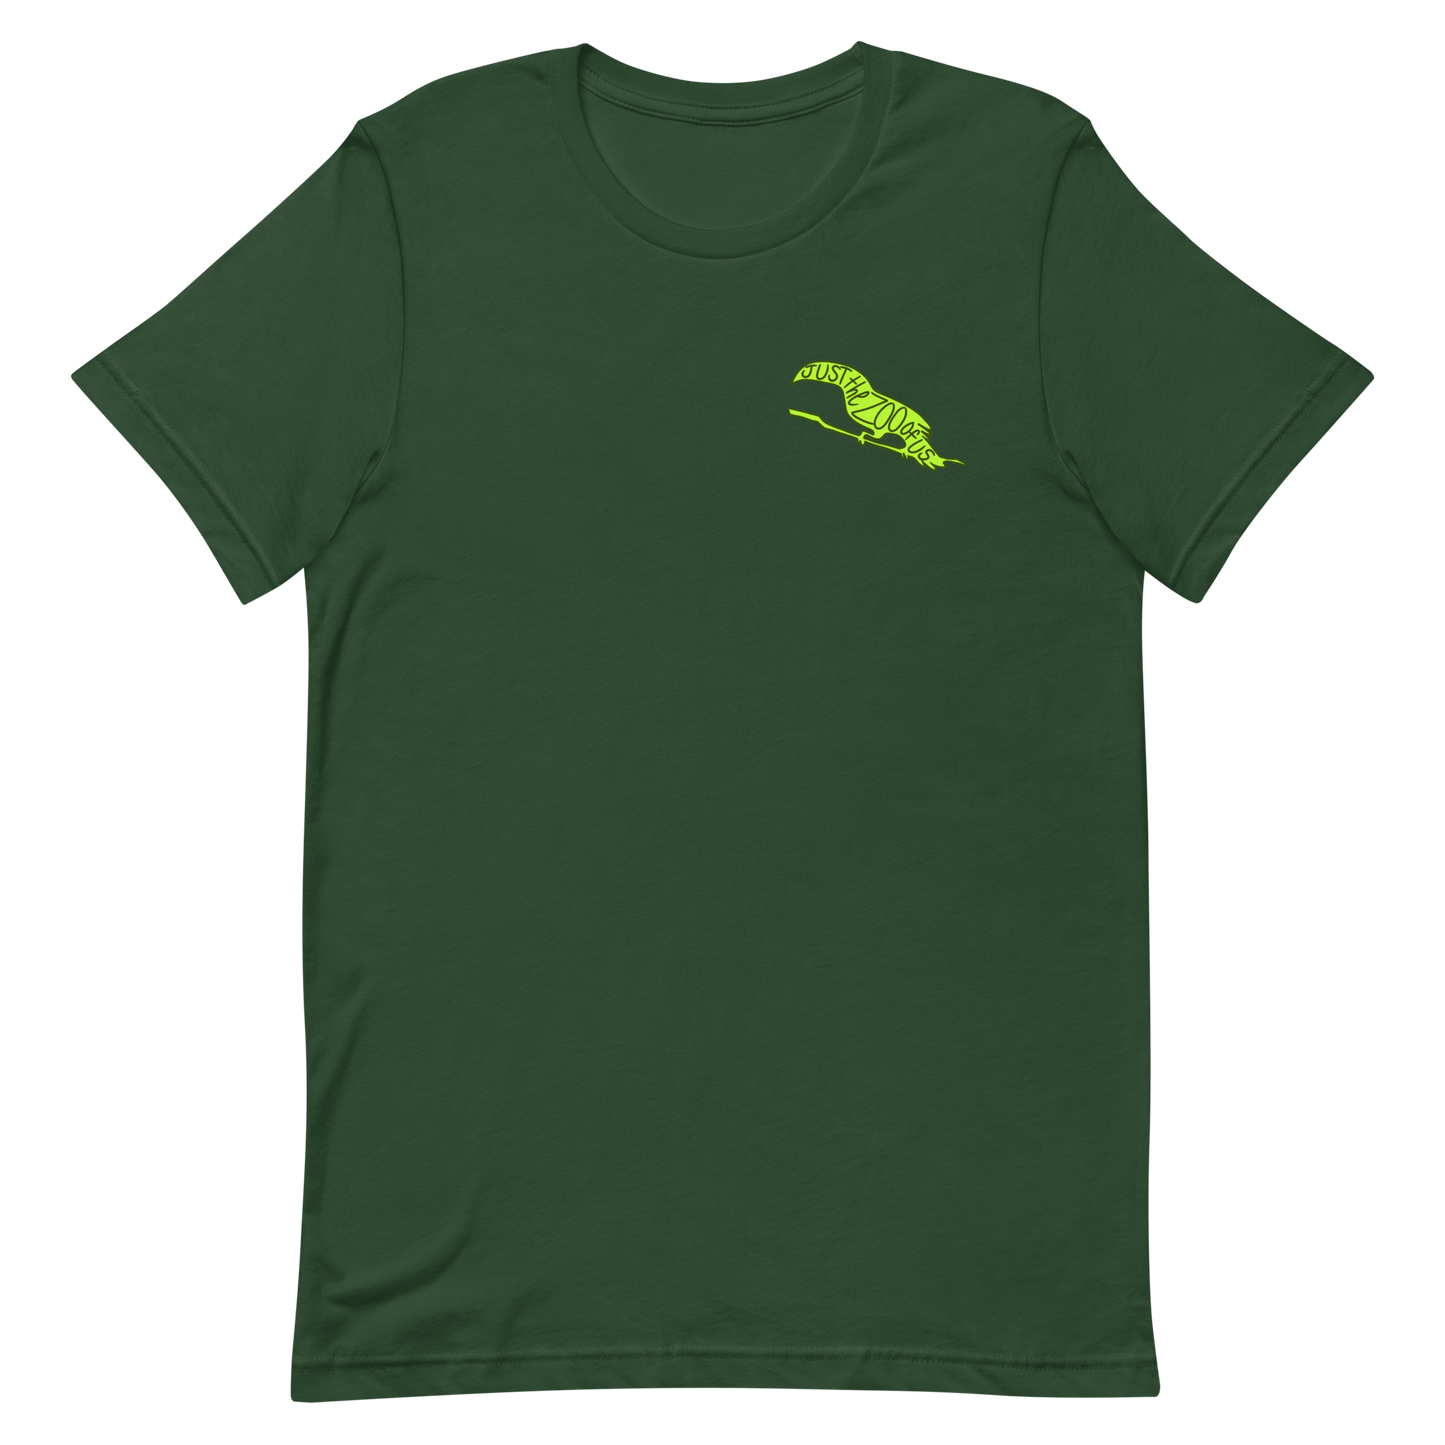 Toucan T-shirt